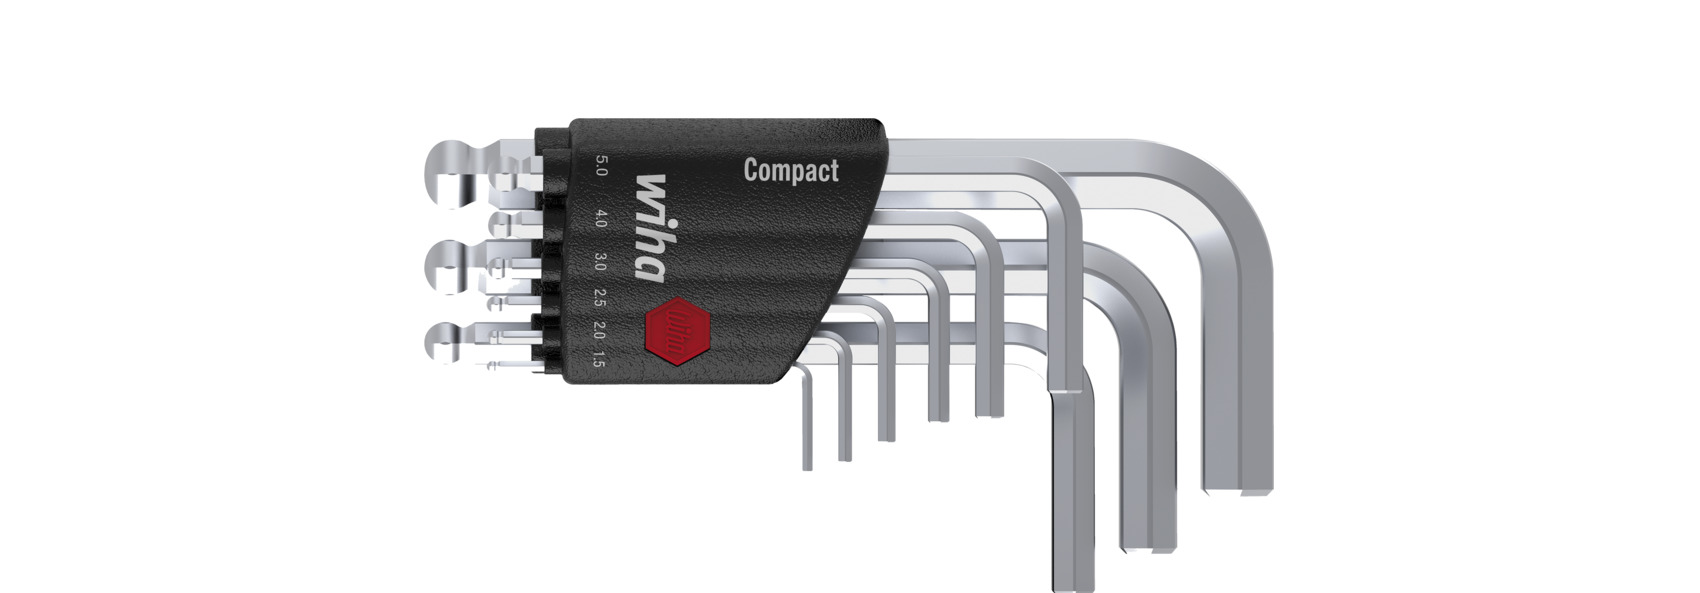 Stiftschlüssel Set im Compact | 9-tlg. | Stiftschlüssel (40410) Sechskant-Kugelkopf Wiha Werkzeuge | mattverchromt Halter kurz, Compact Halter